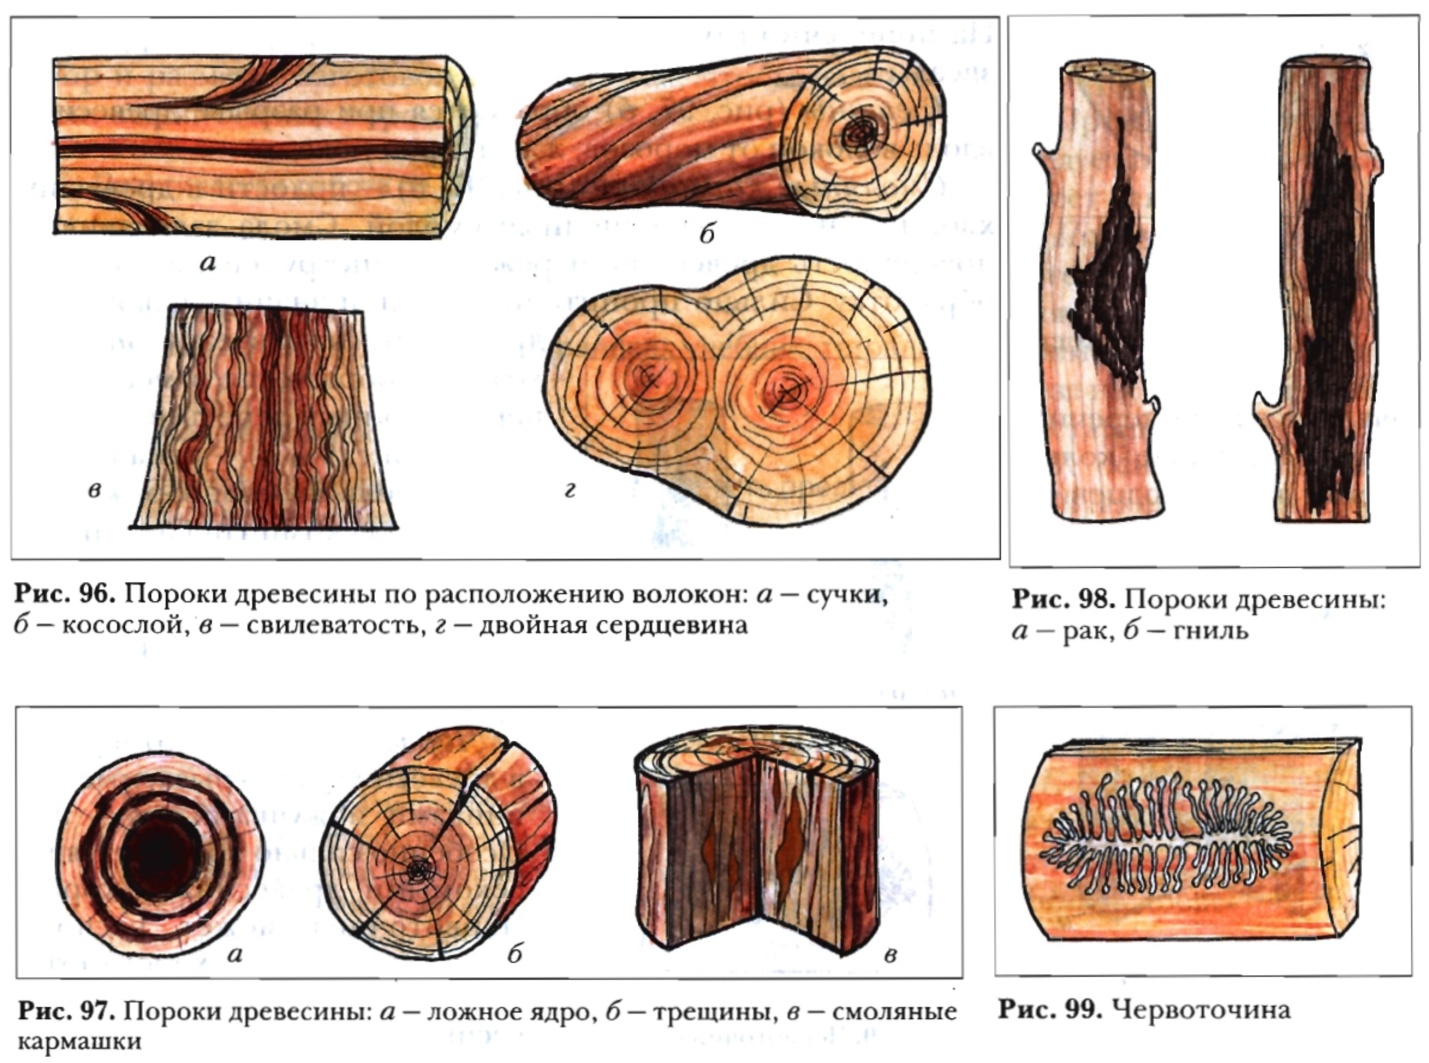 Тест - проверка знаний по темам заготовка и пороки древесины.